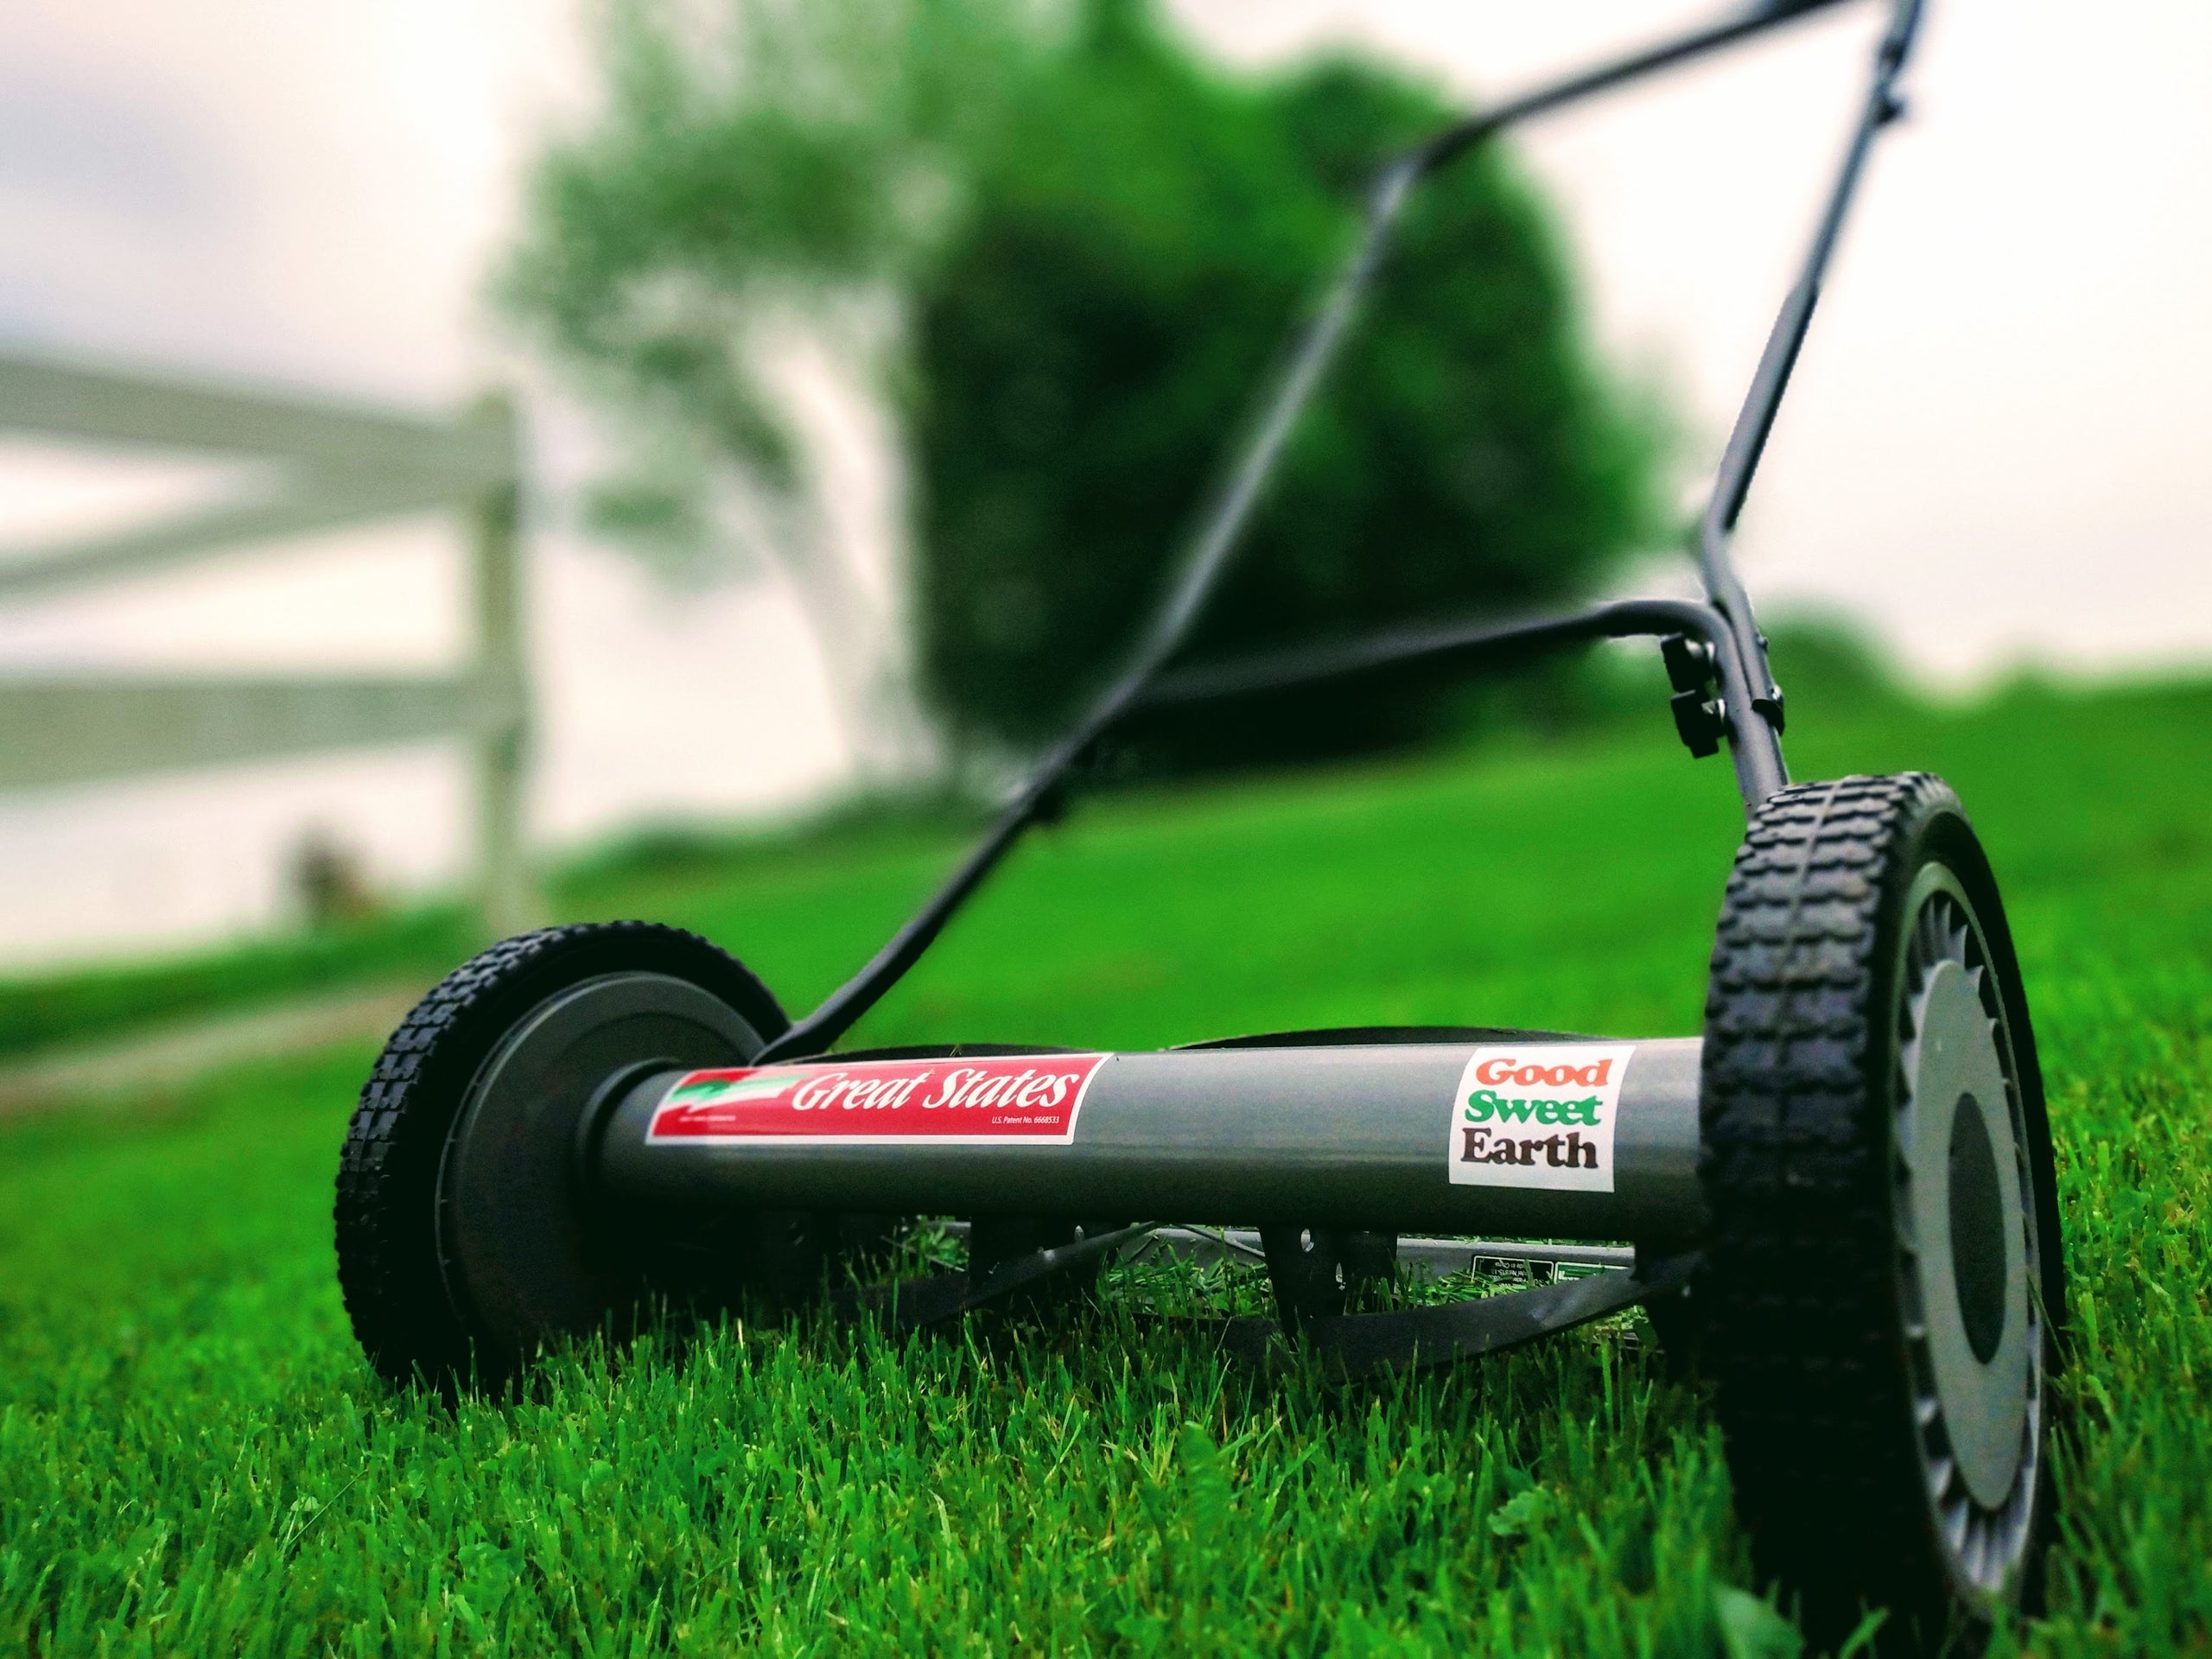 Classic Push Reel Lawn Mower; 18-inch, five-blade